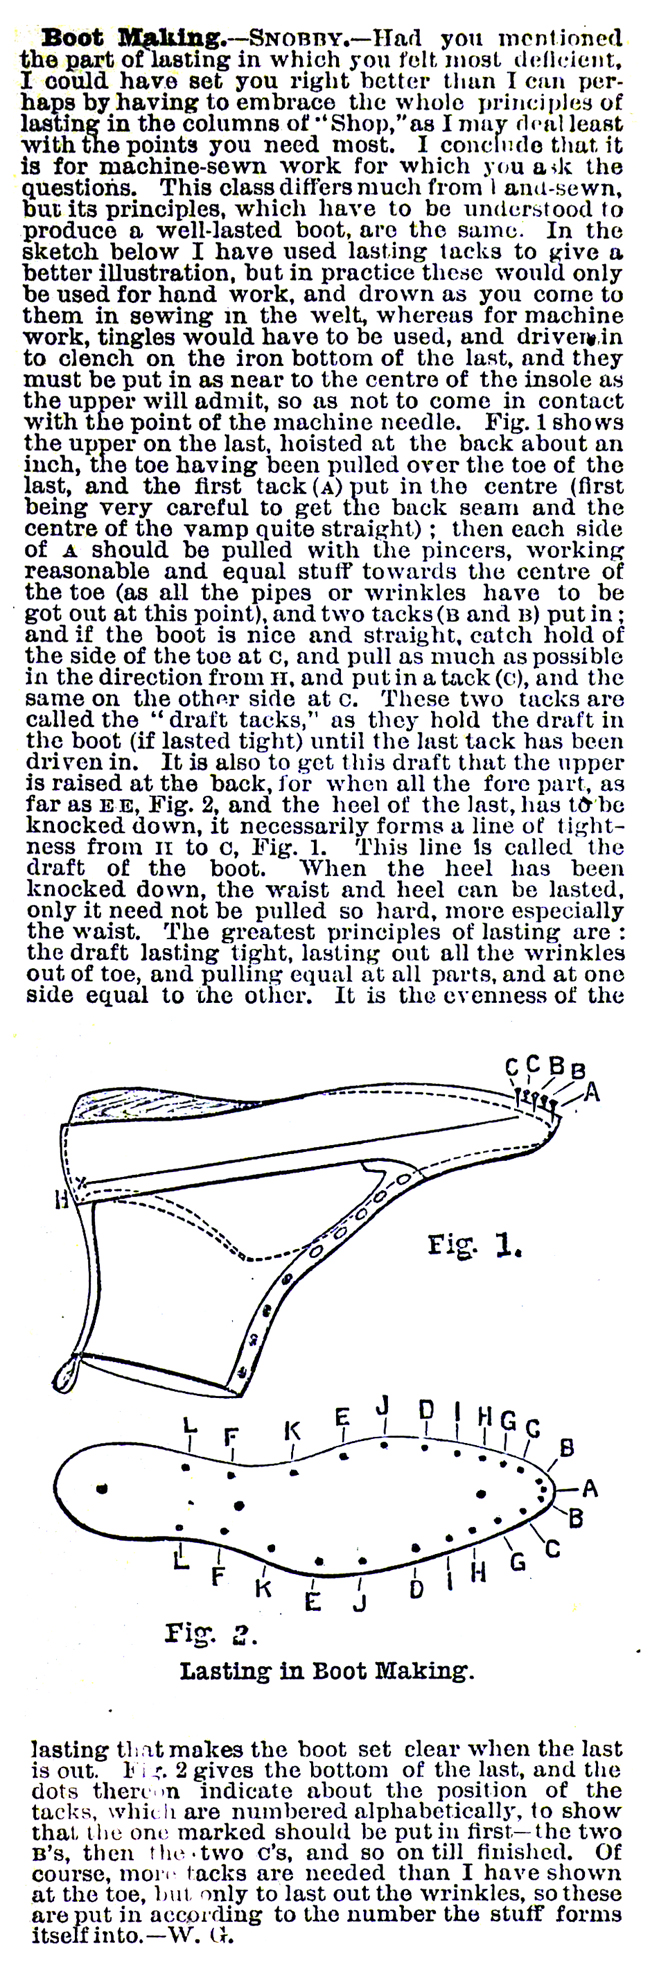 WORK No. 96- Published January 17, 1891 6